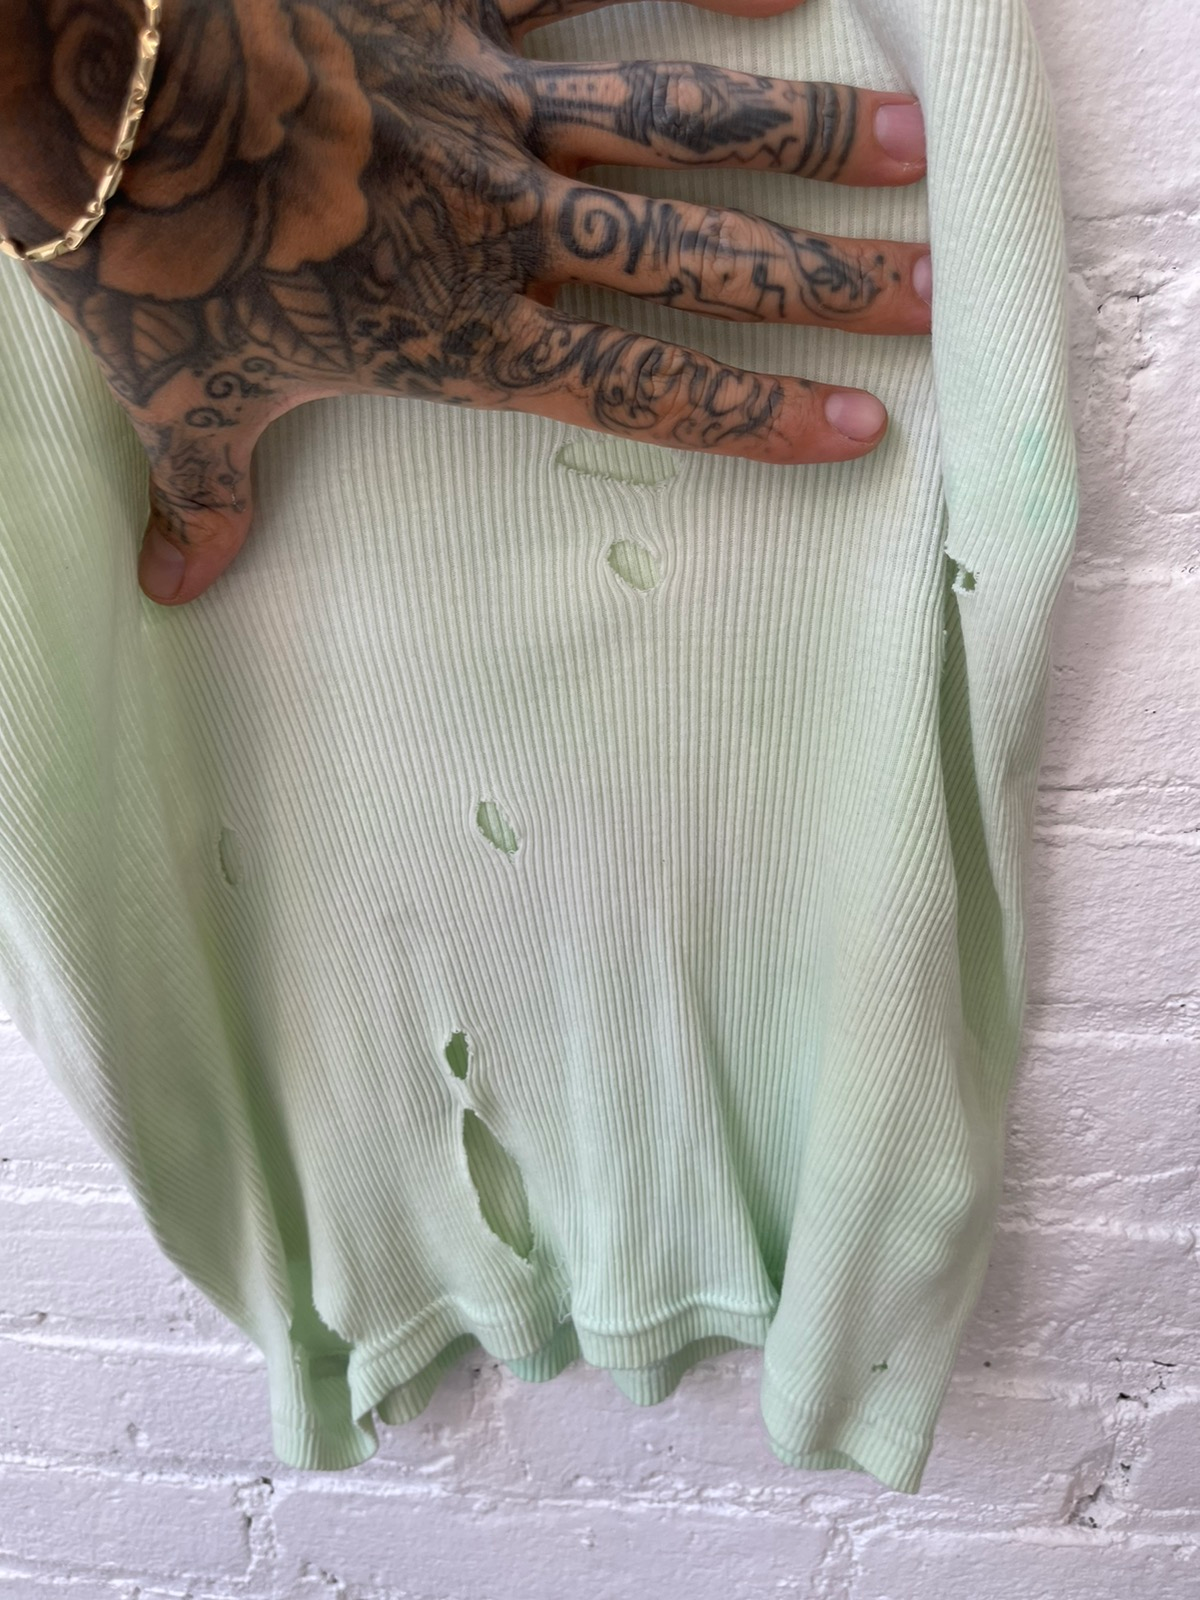 Vintage THRASHED Neon Lime Green Tanktop Shirt 4Gseller